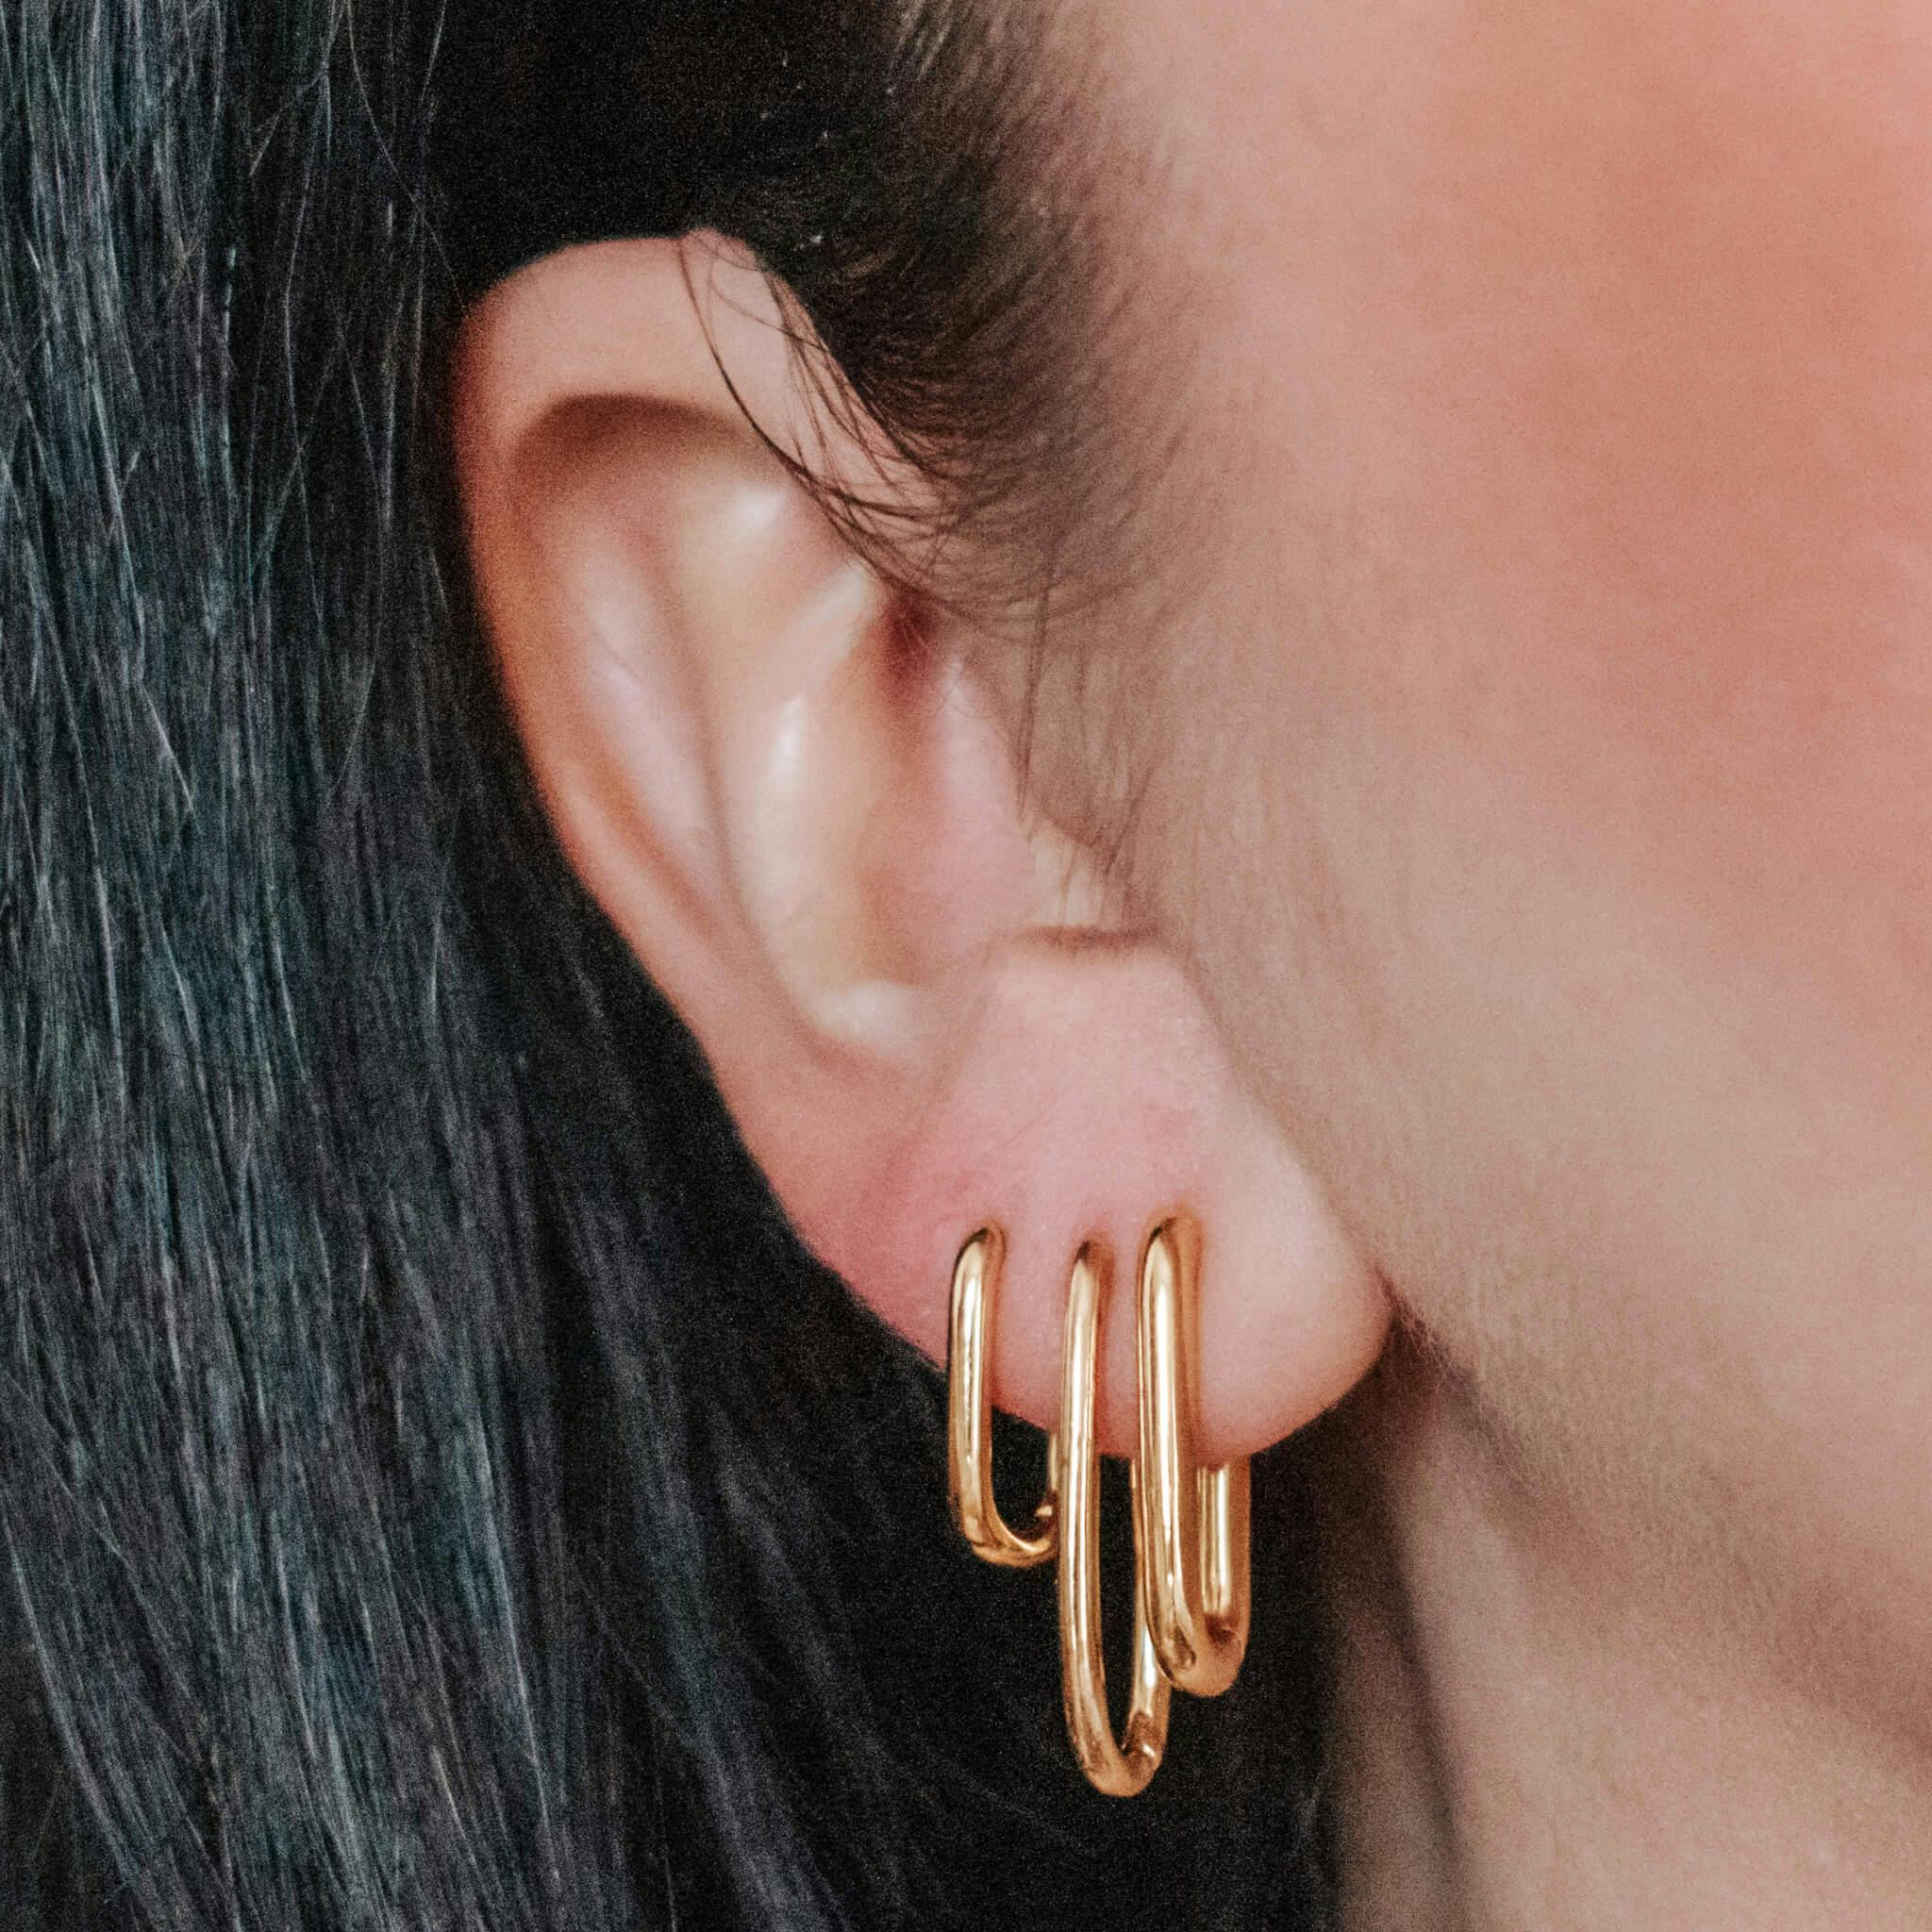 Baby Halo Oval Hoop Earrings in Titanium (Gold) on model